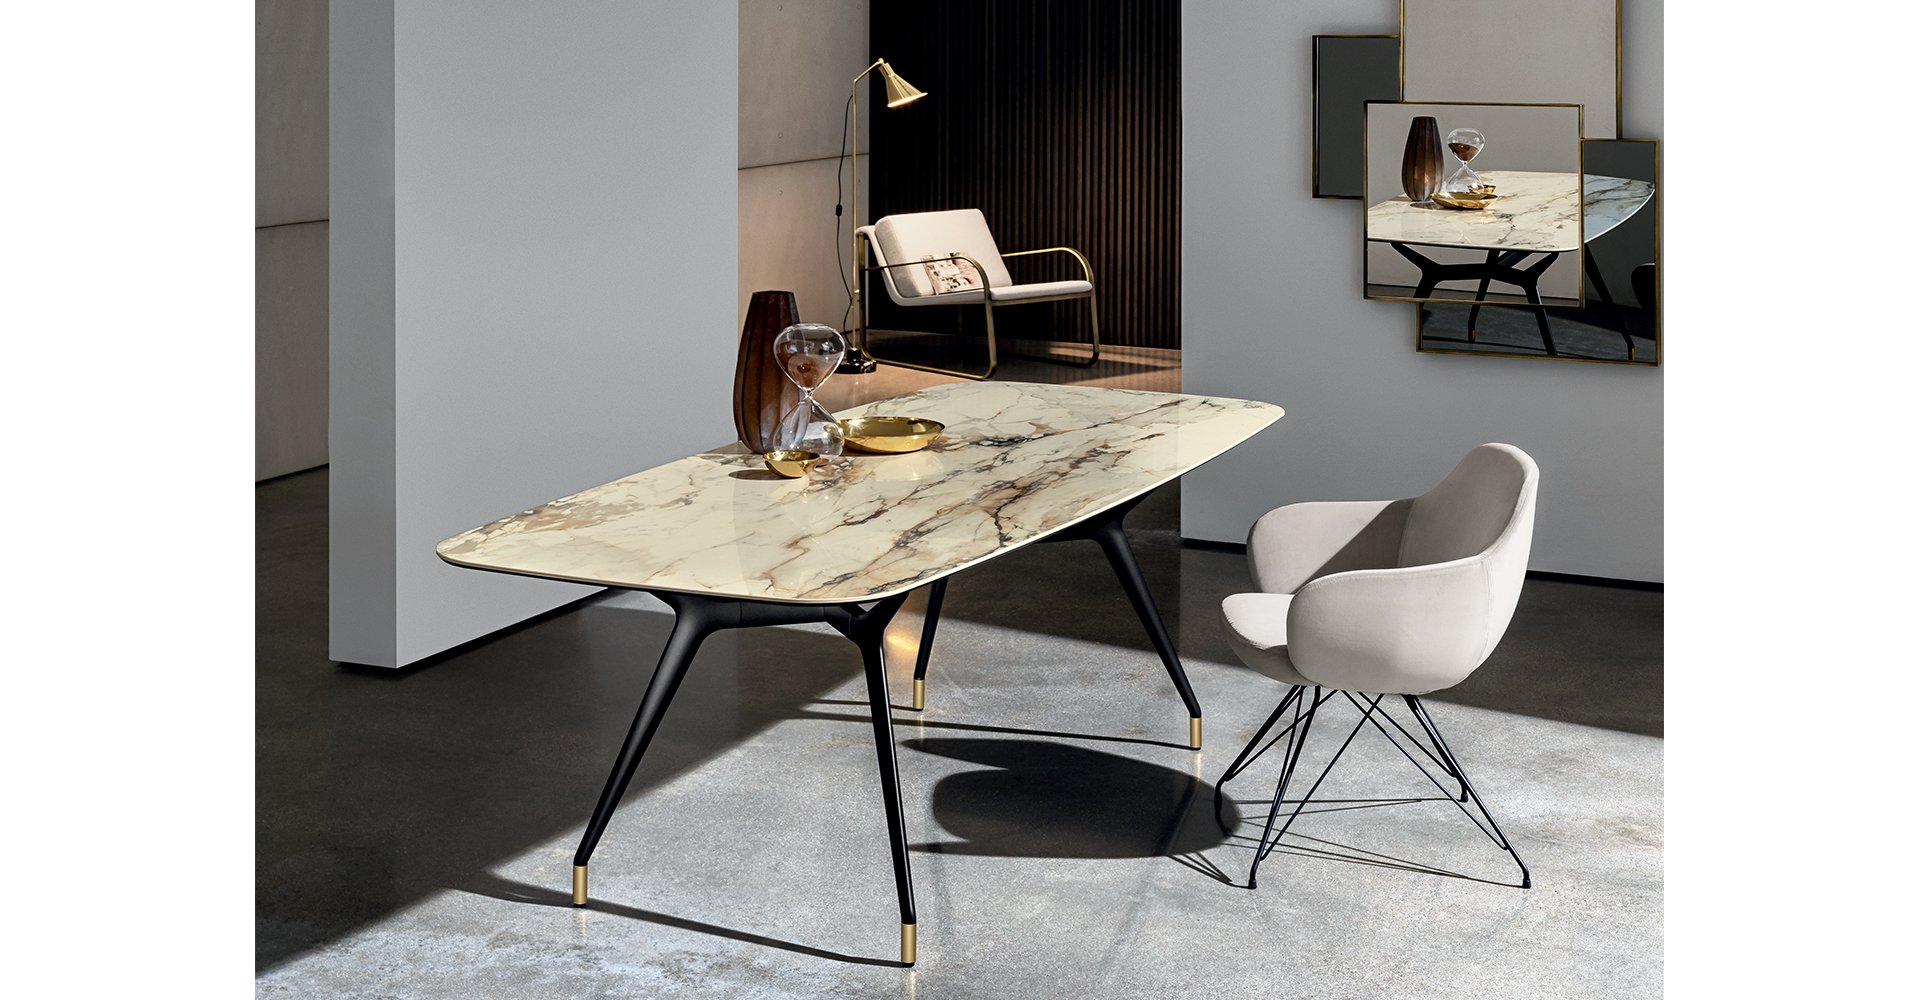 Arkos Dining Table from Sovet, designed by Gianluigi Landoni